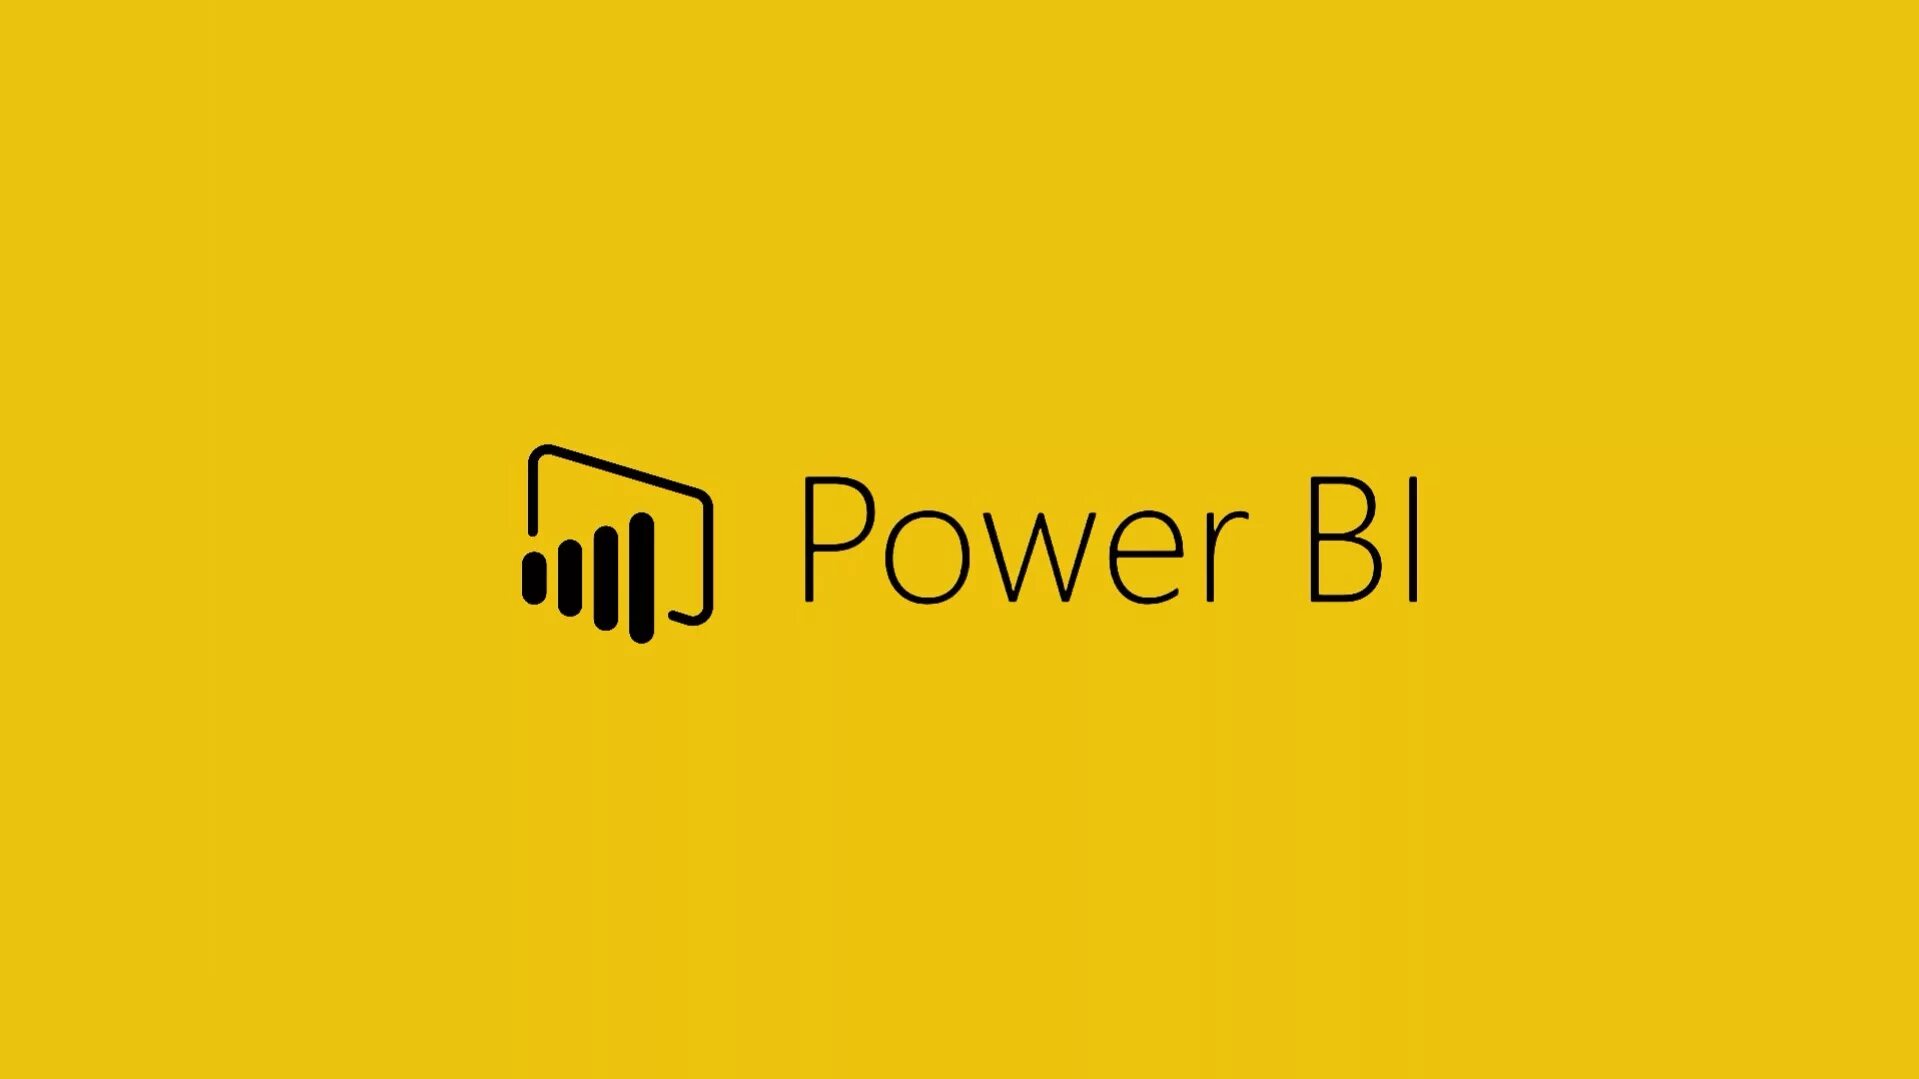 Power bi download. Power bi. Power bi лого. Майкрософт Power bi. Power bi Premium.